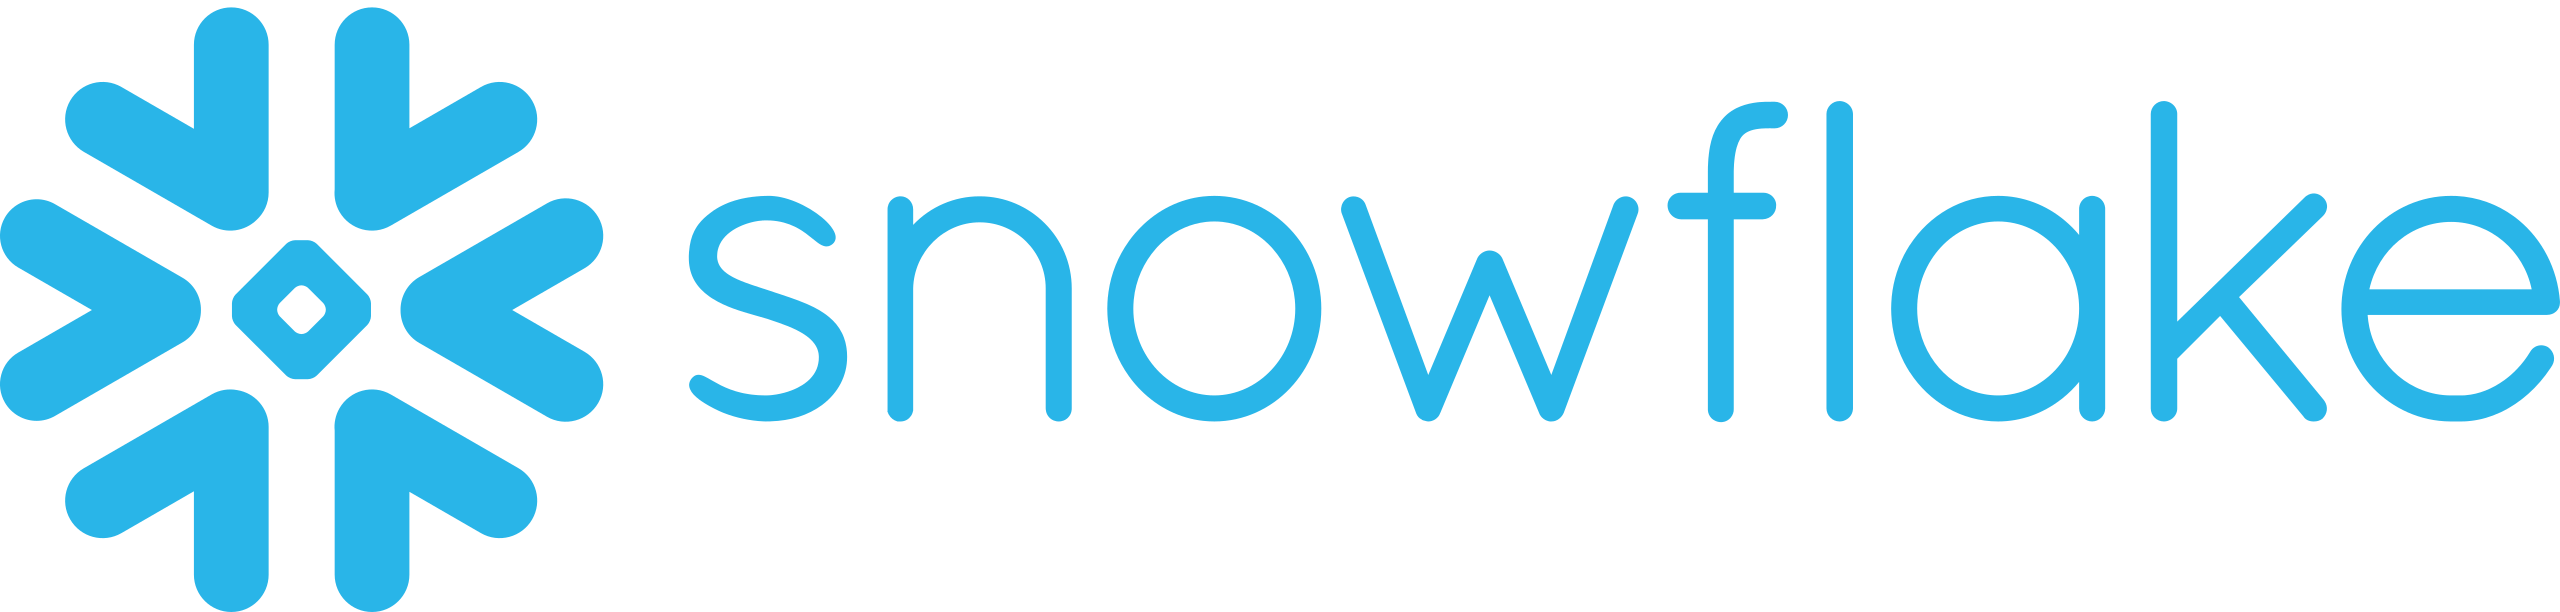 Snowflake_Logo.svg.png